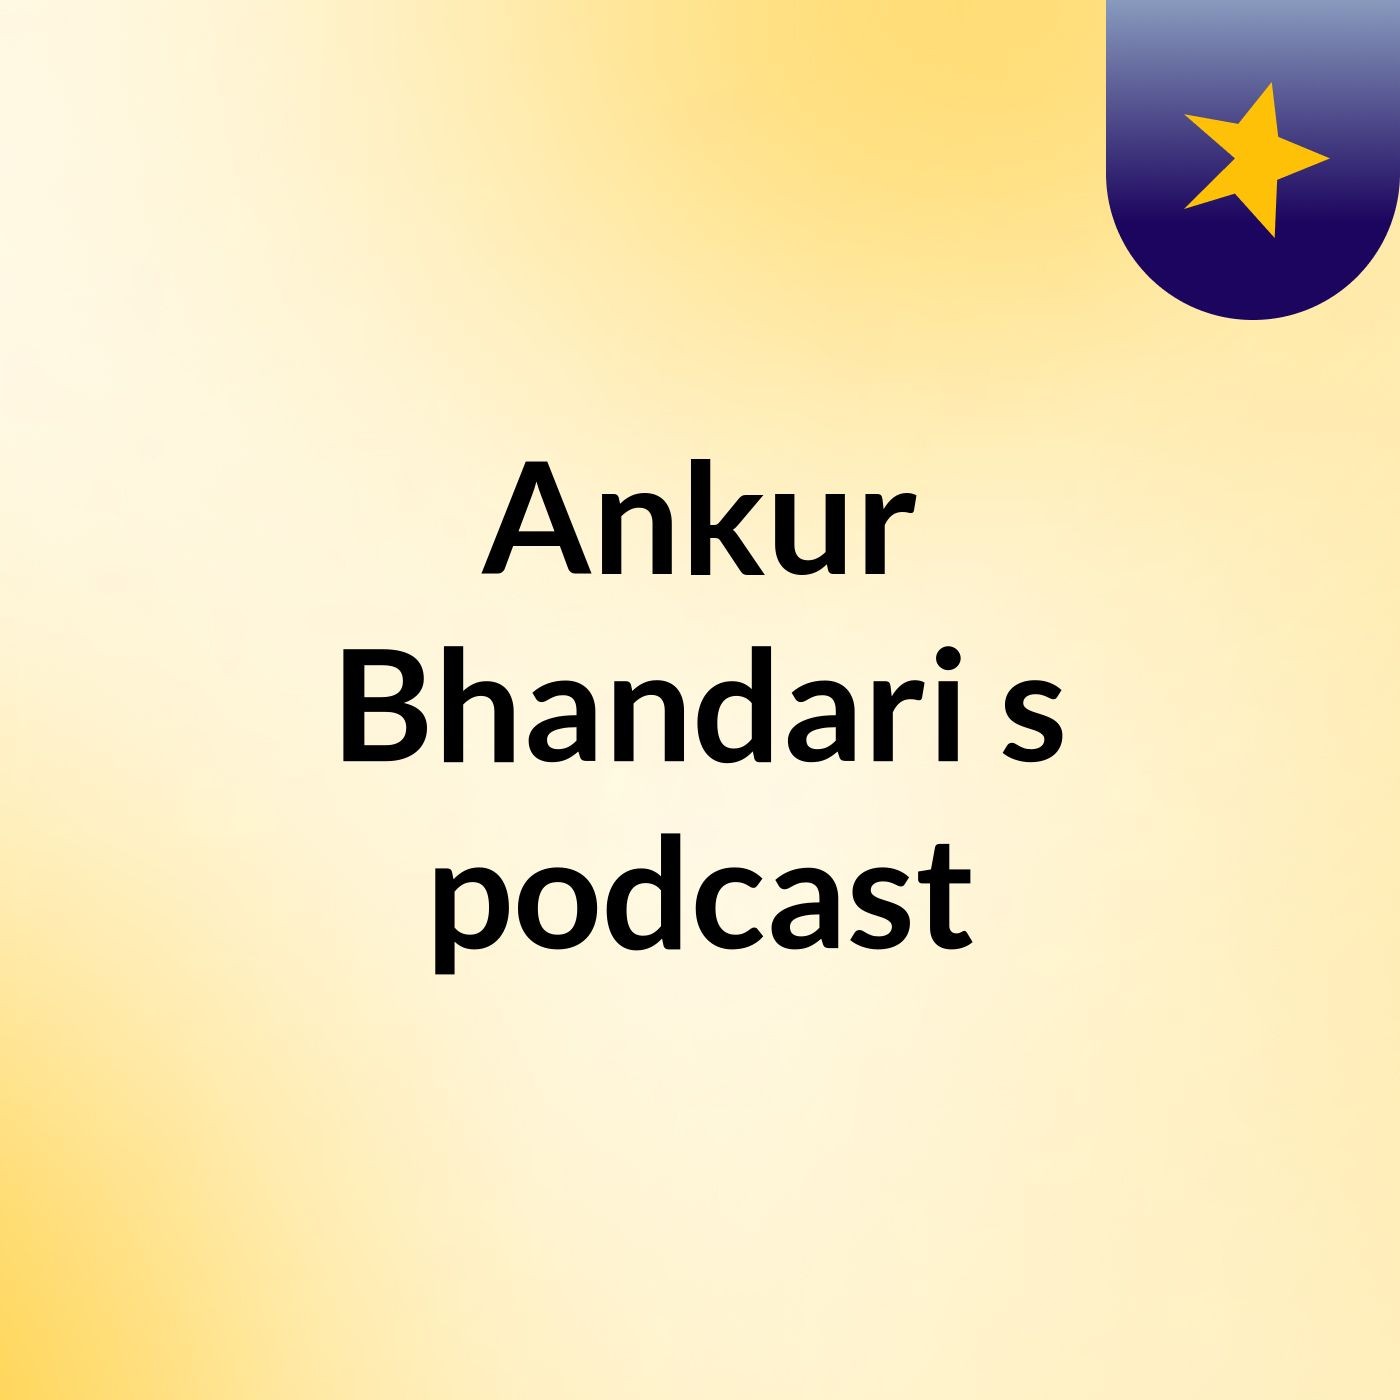 Ankur Bhandari's podcast